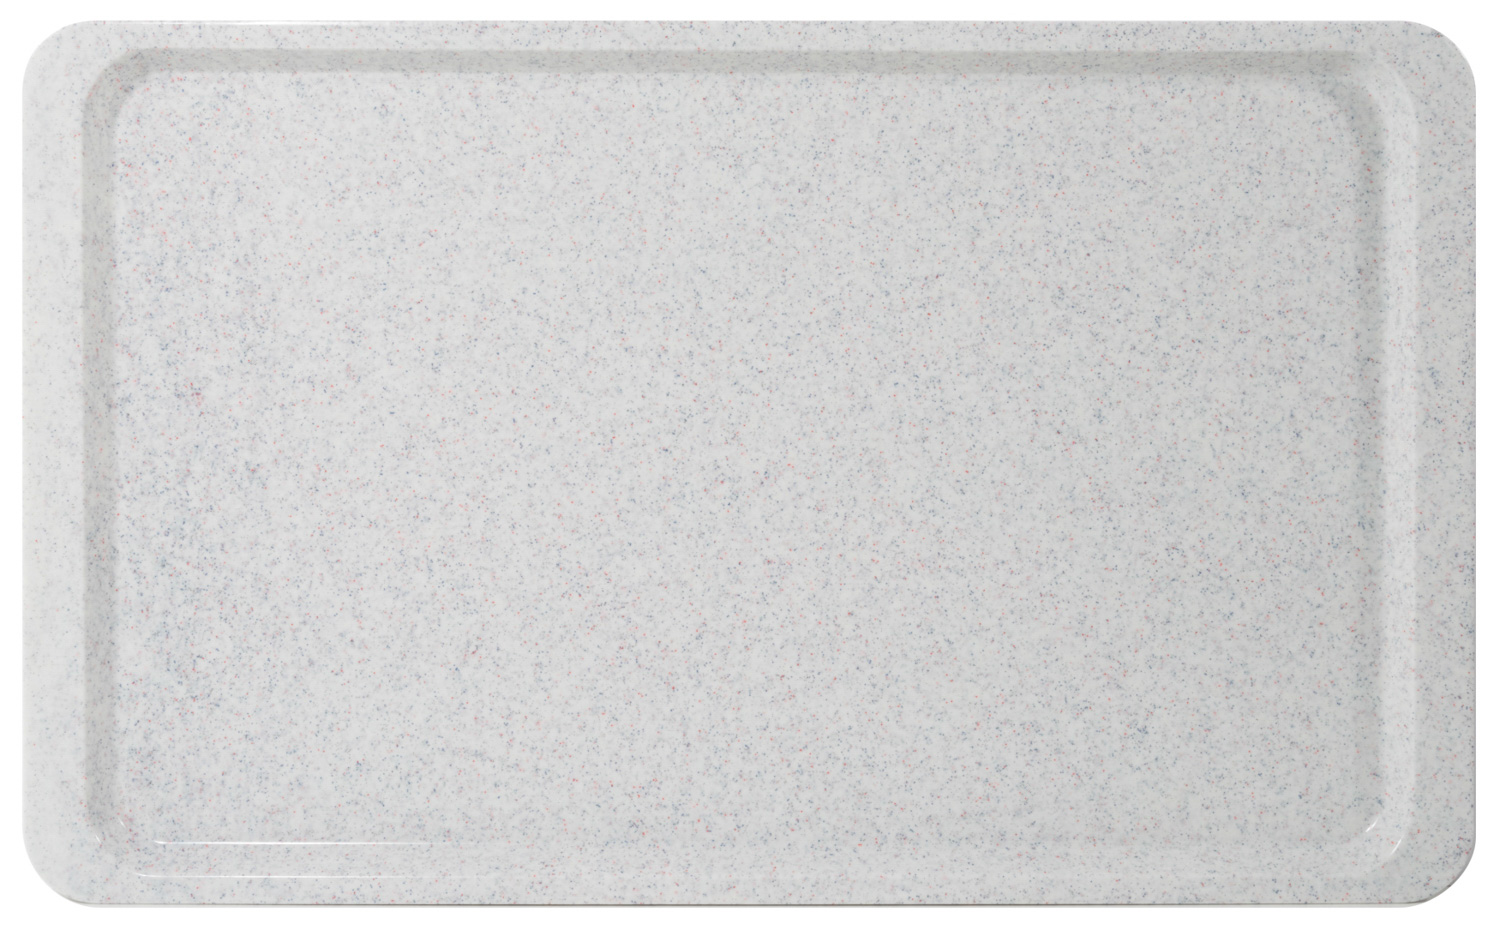 Tablett EASY Euronorm EN 1/1, Farbe: granit, aus glasfaserverstärktem Polyesterharz, Länge: 53 cm, Breite: 37 cm, Höhe: 1,6 cm